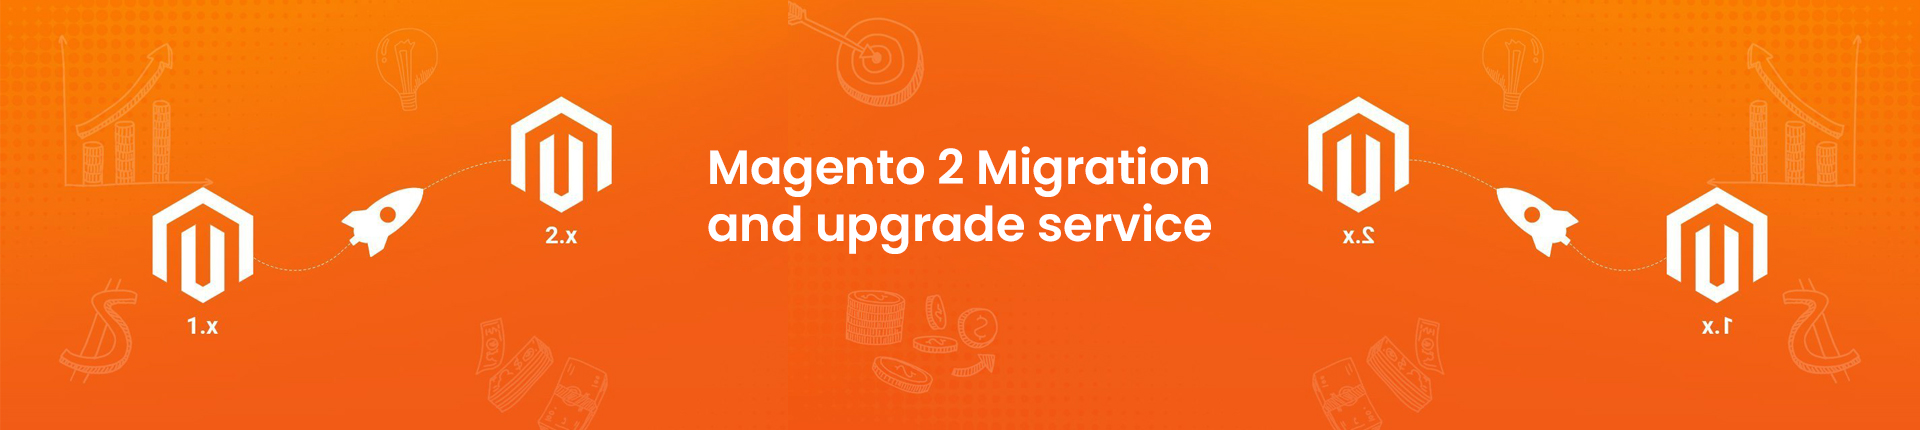 Magento-2-Migration